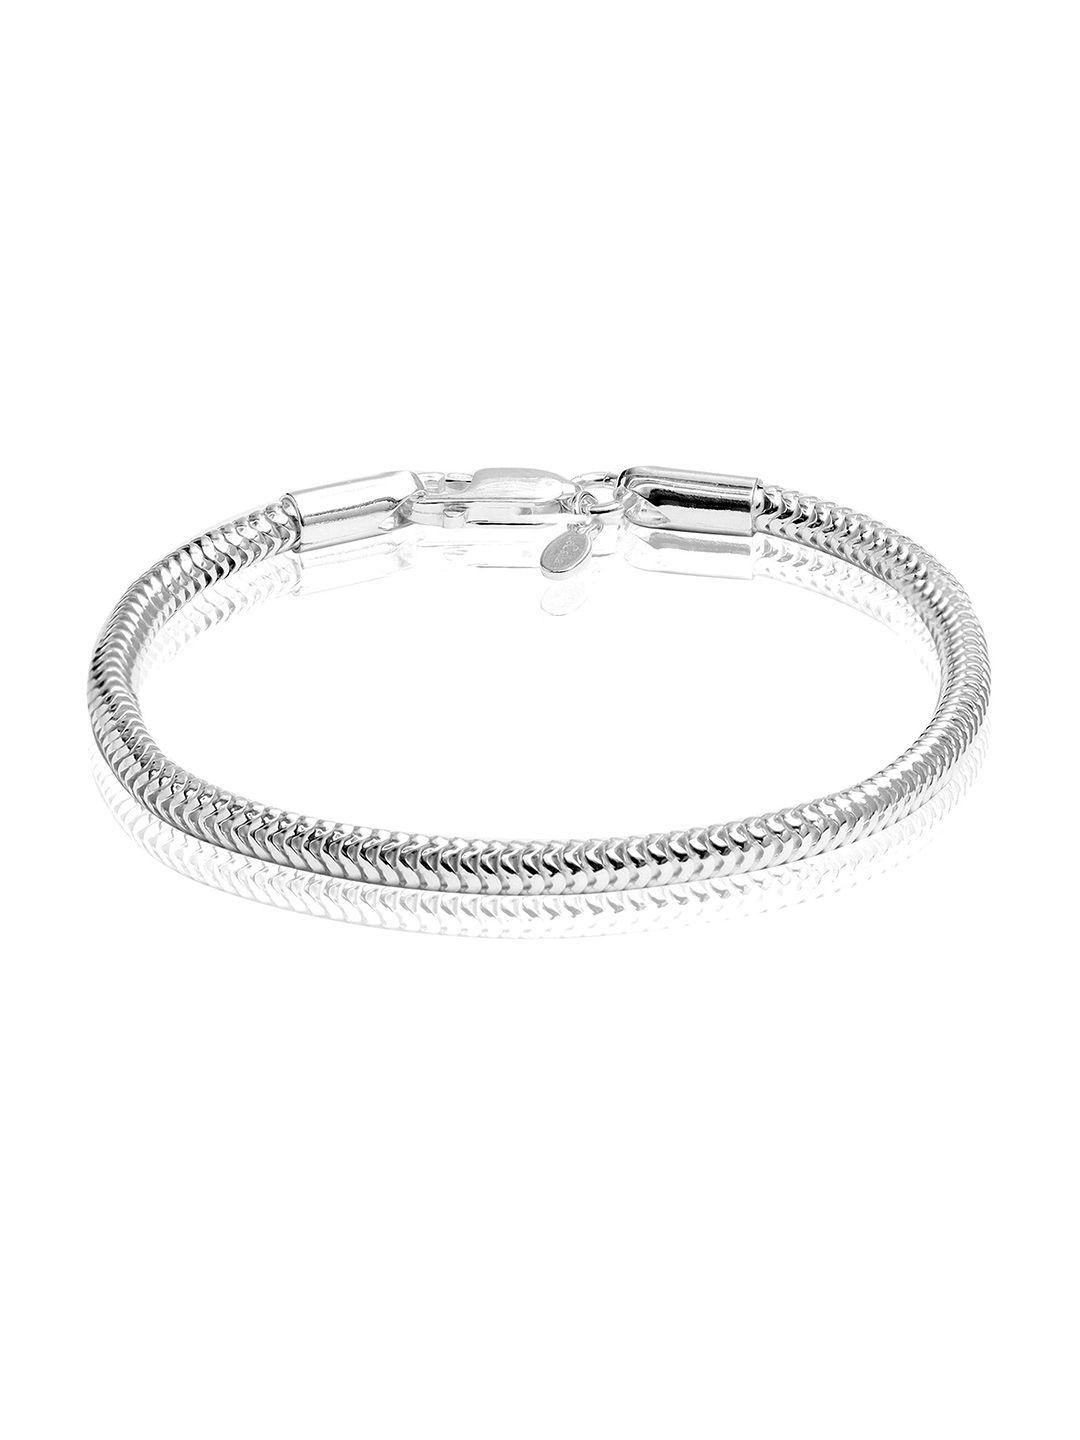 lecalla unisex sterling silver rhodium-plated charm bracelet